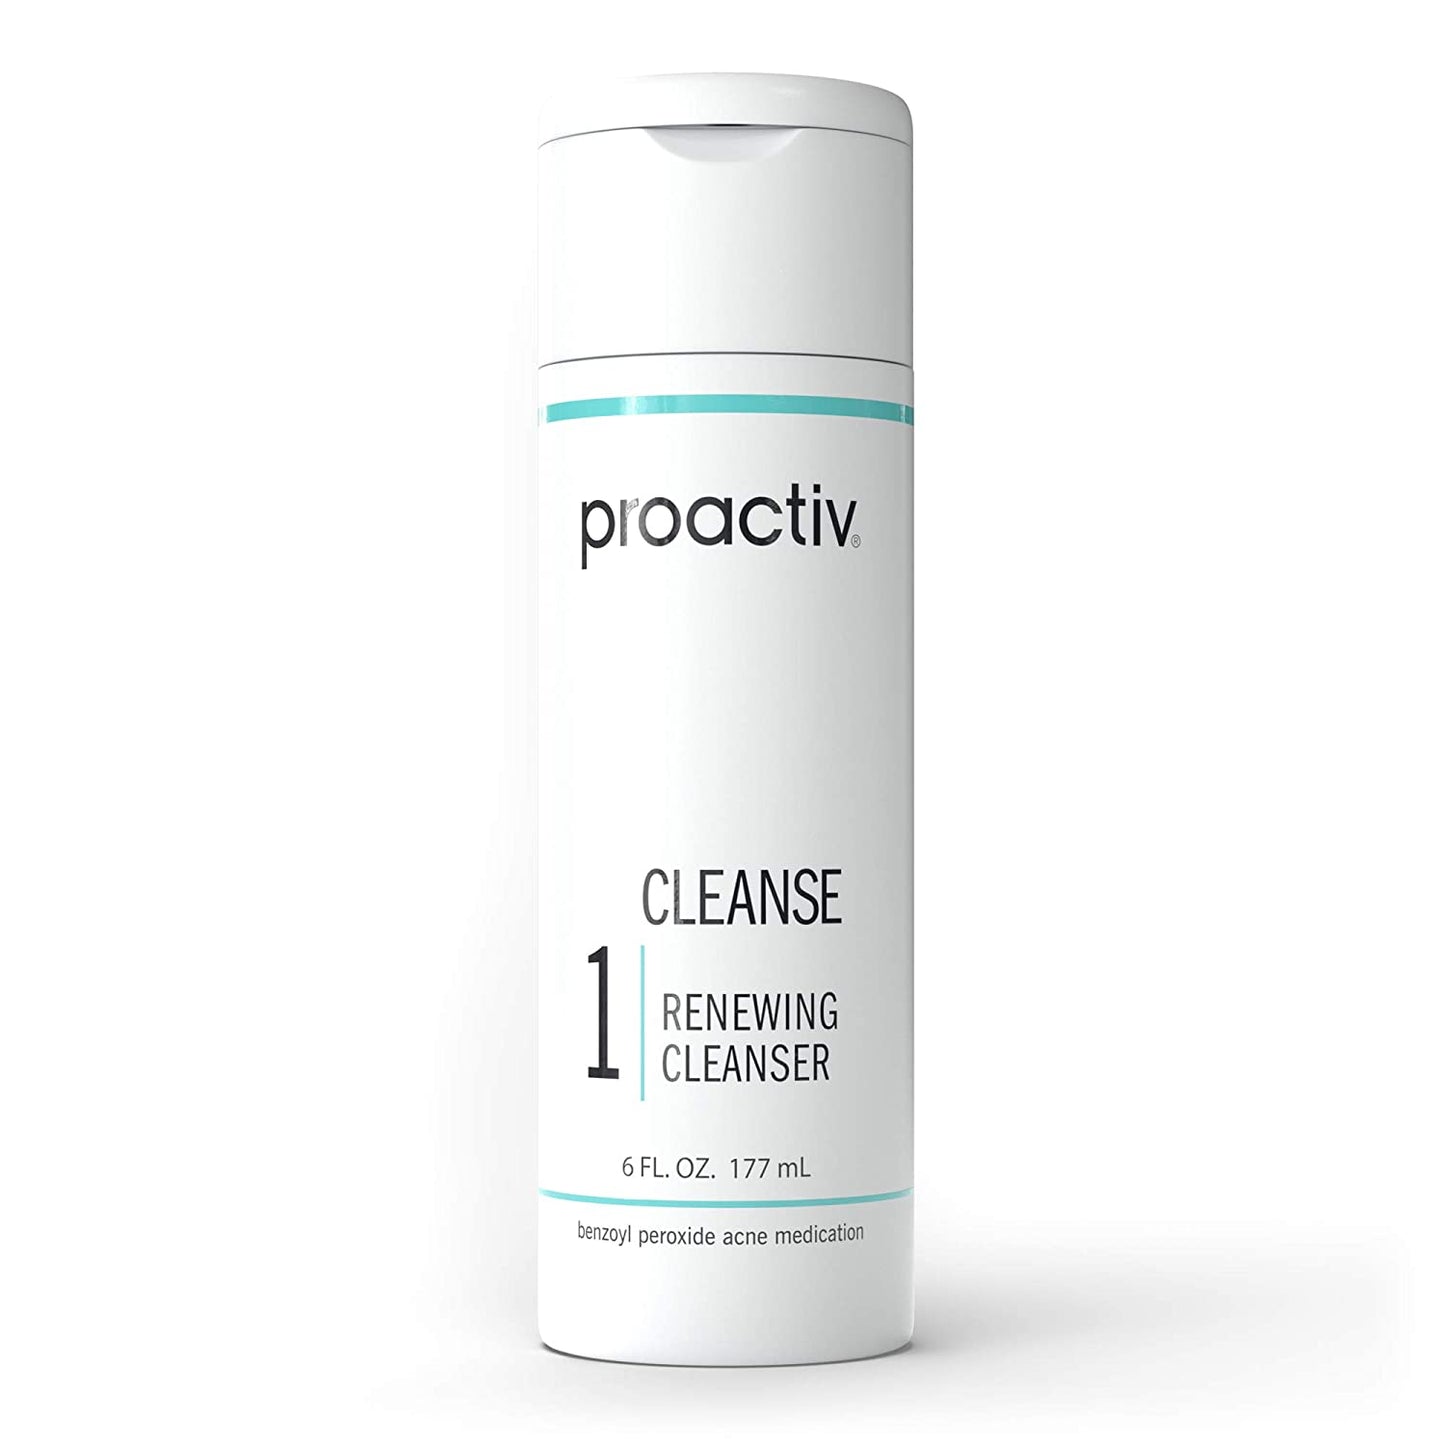 Proactiv Cleanse, Benzoyl Peroxide Face Wash And Acne Medication, 6 fl.oz / 177ml